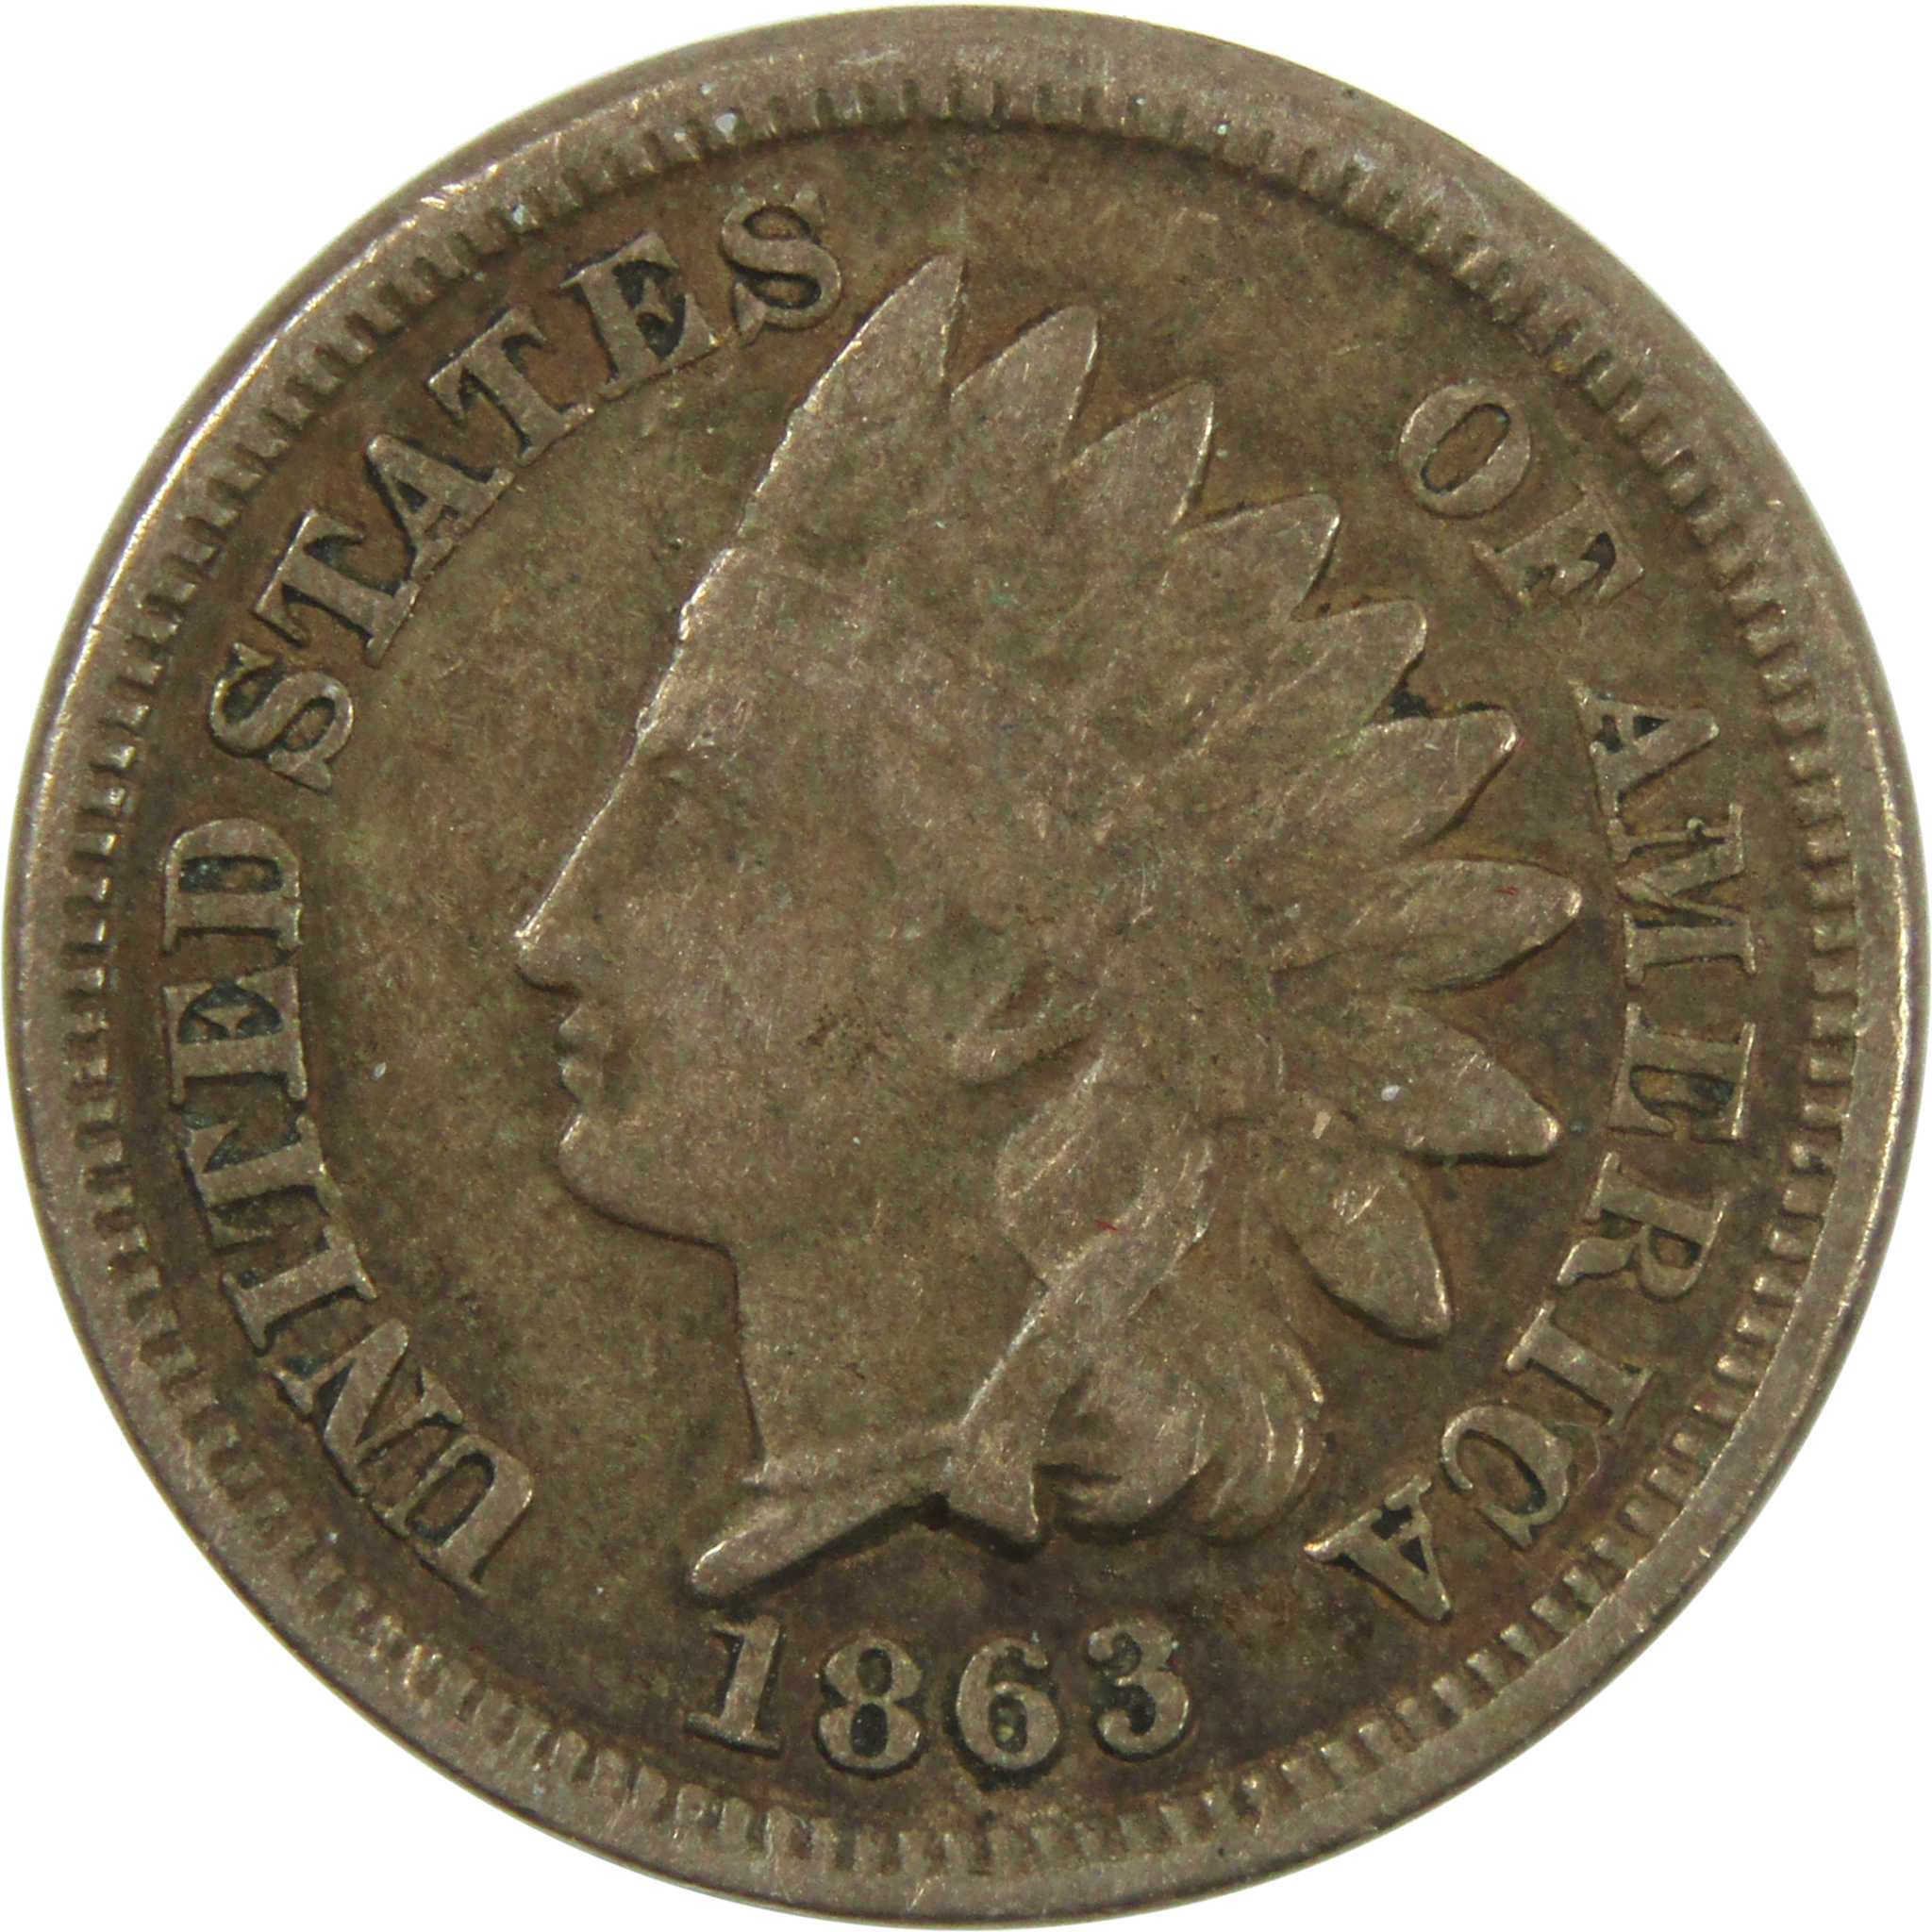 1863 Indian Head Cent VF Very Fine Copper-Nickel Penny 1c SKU:I14096